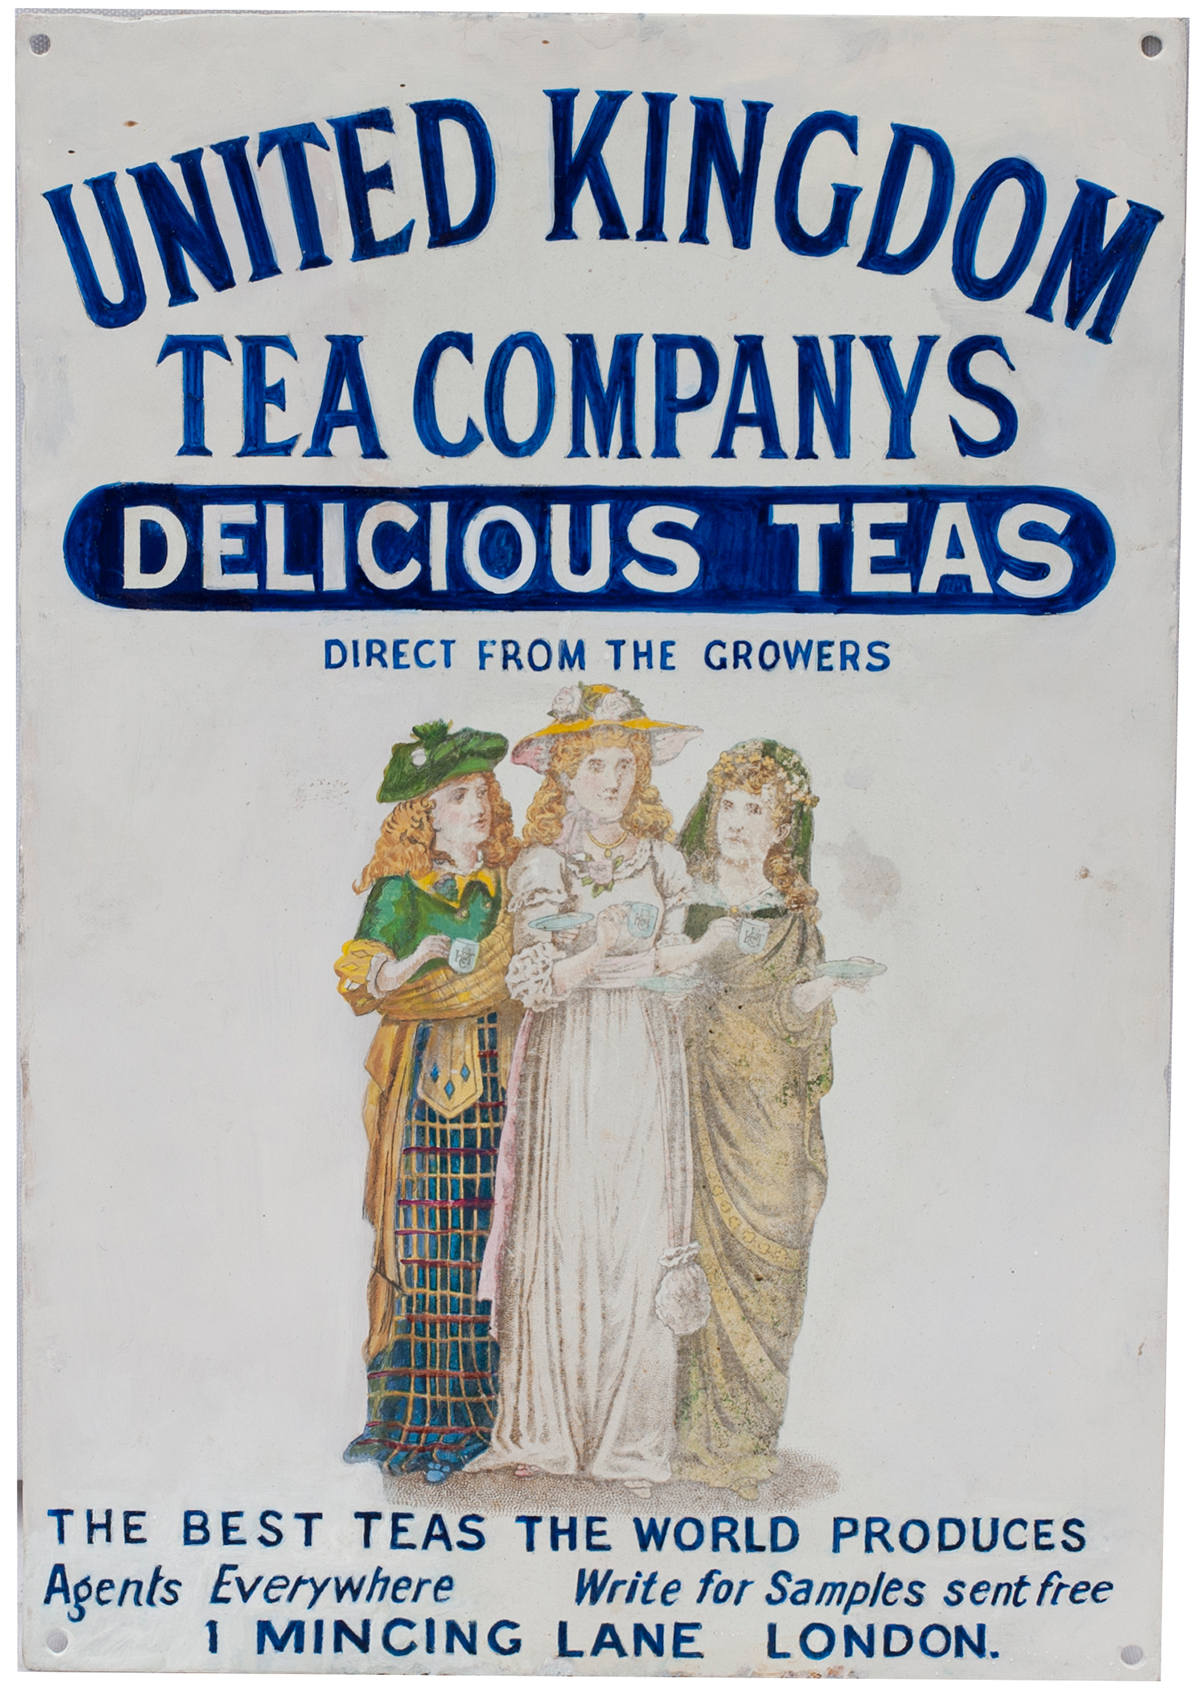 UK Tea Companies